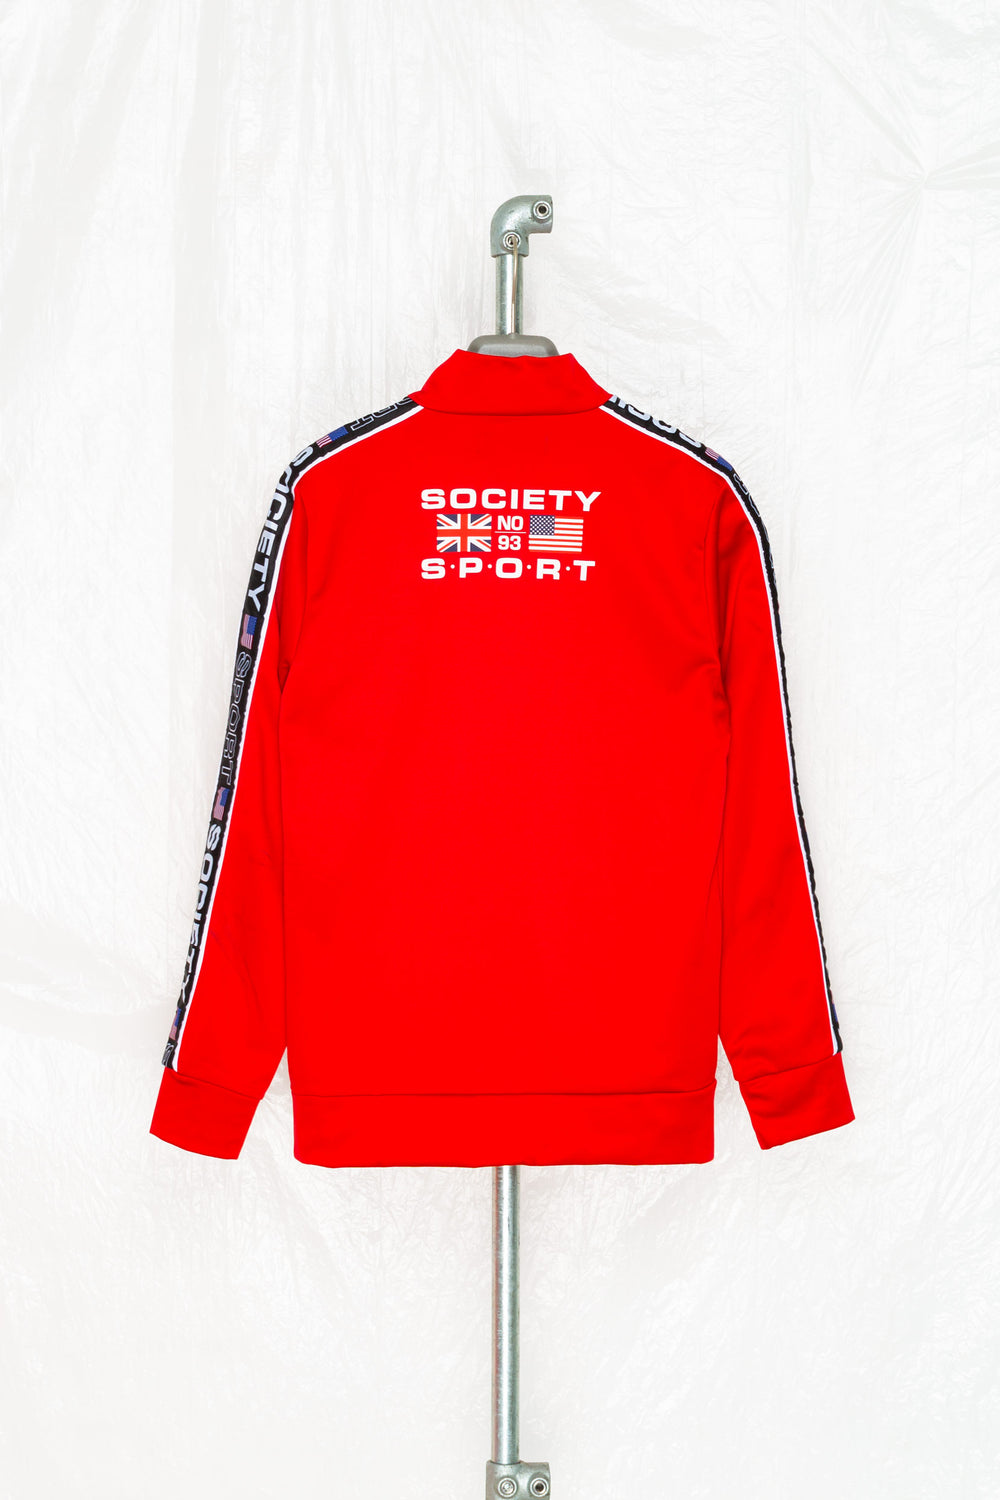 Society sports. Society Sport. Society Sport куртка. Society Sport United States мужская одежда.